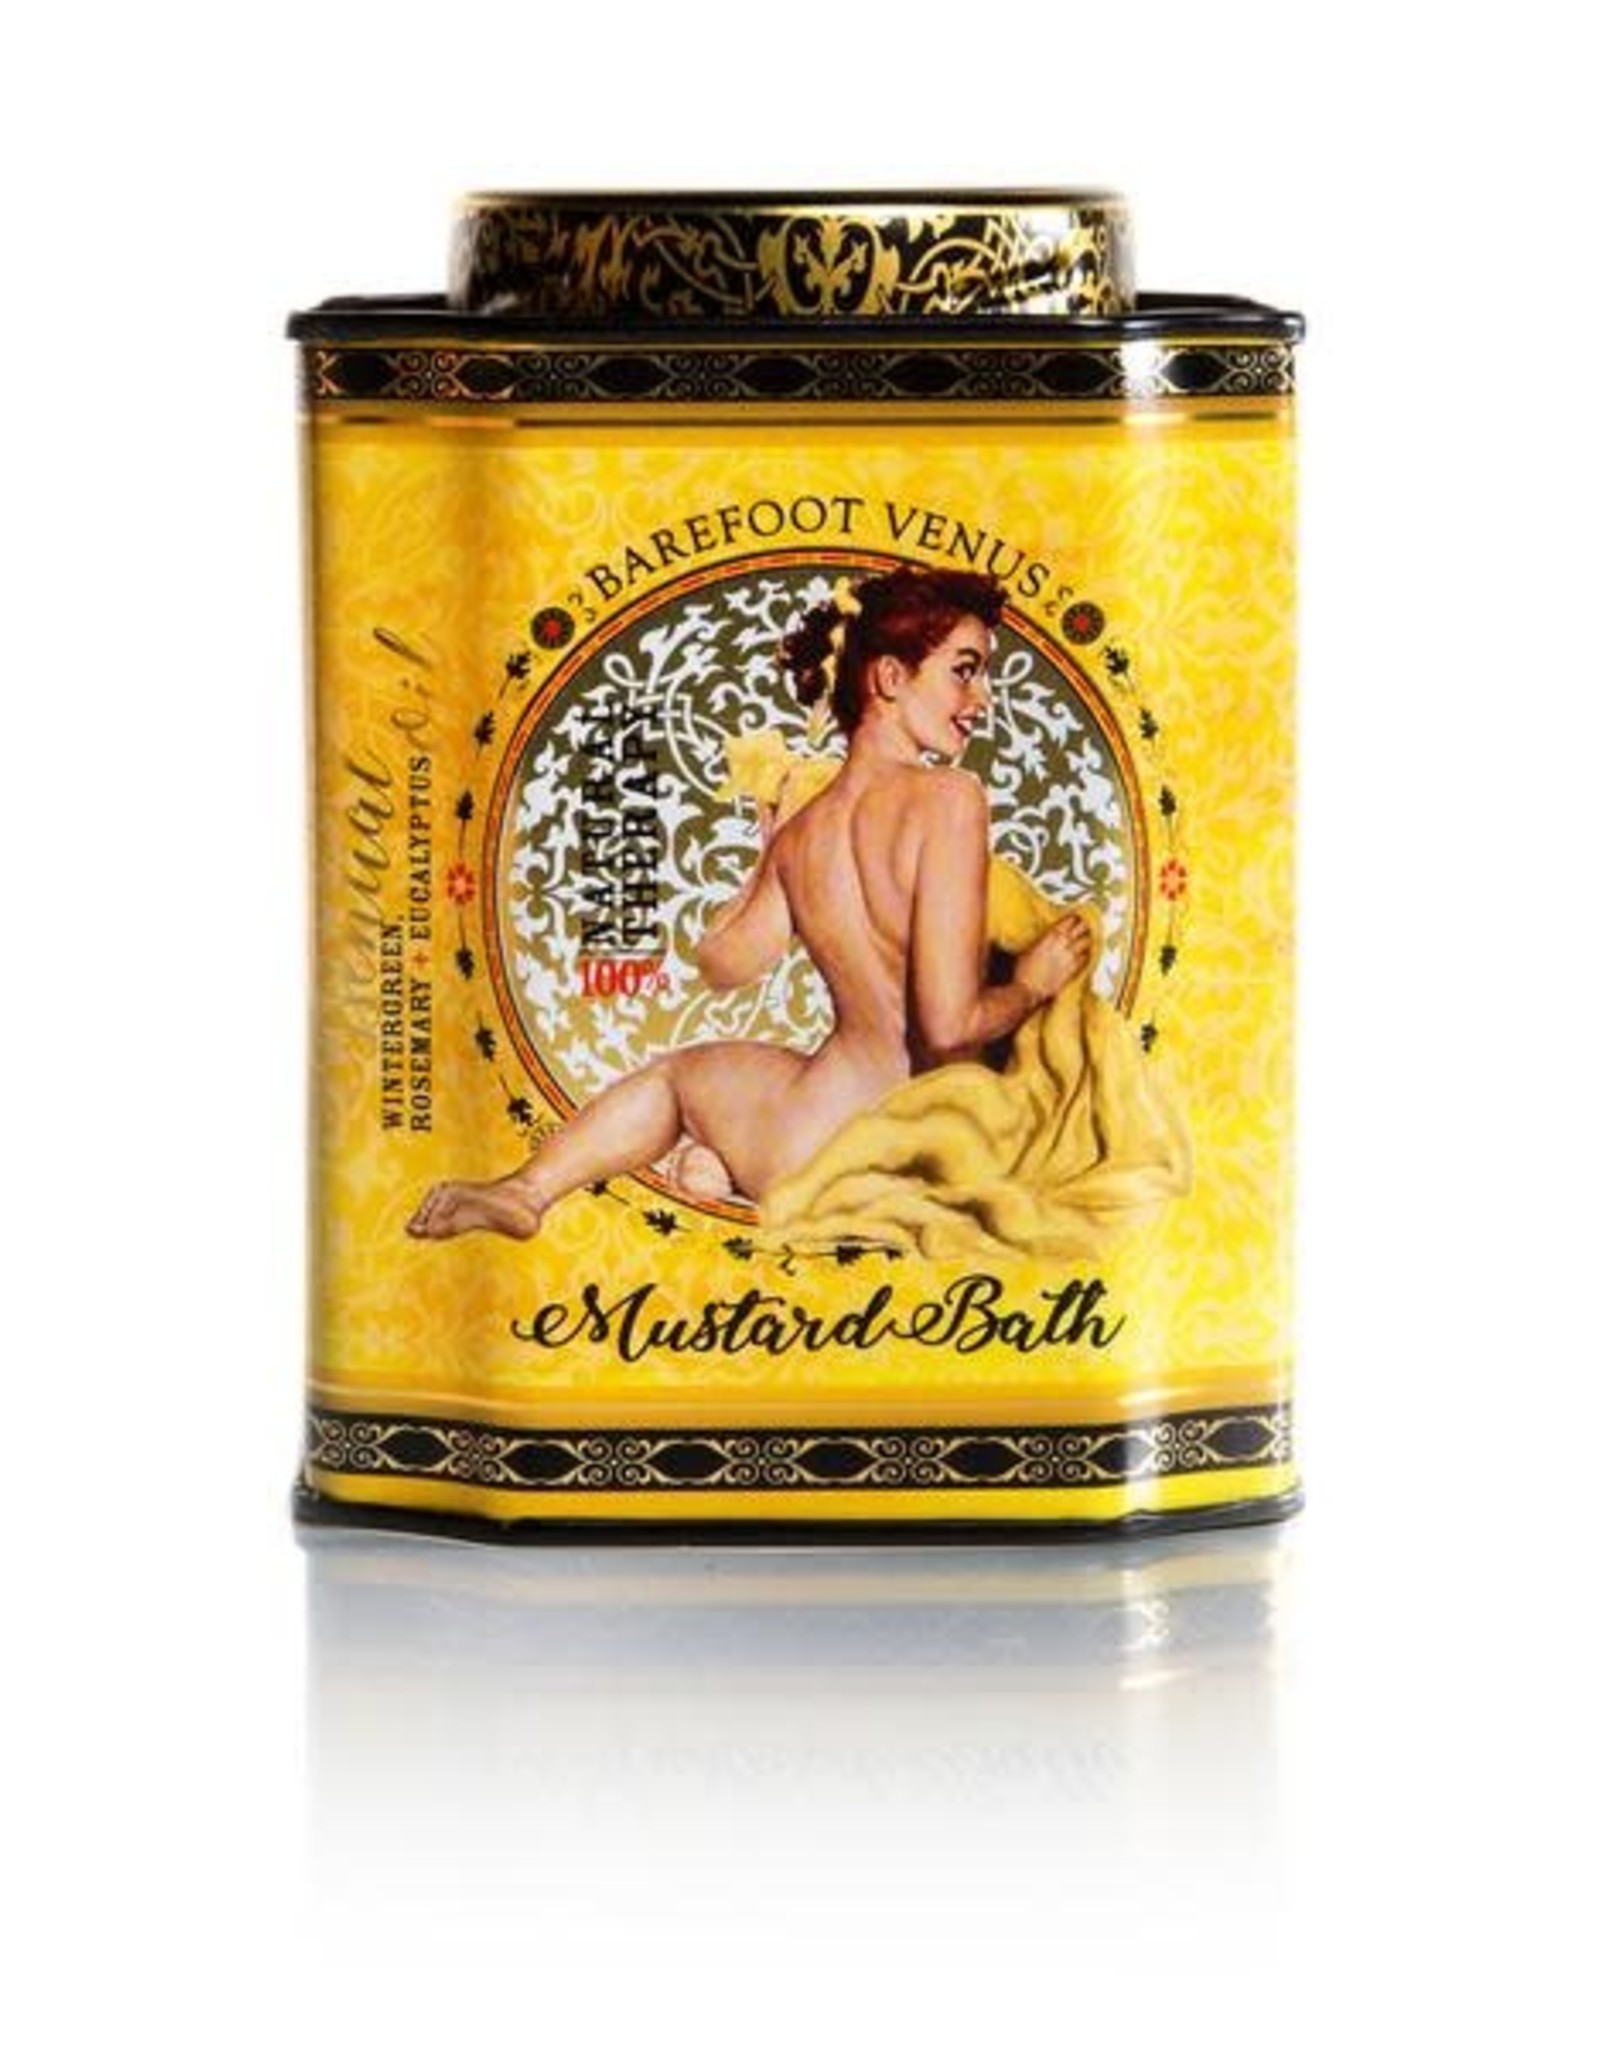 Barefoot Venus BV Mustard Bath Tin